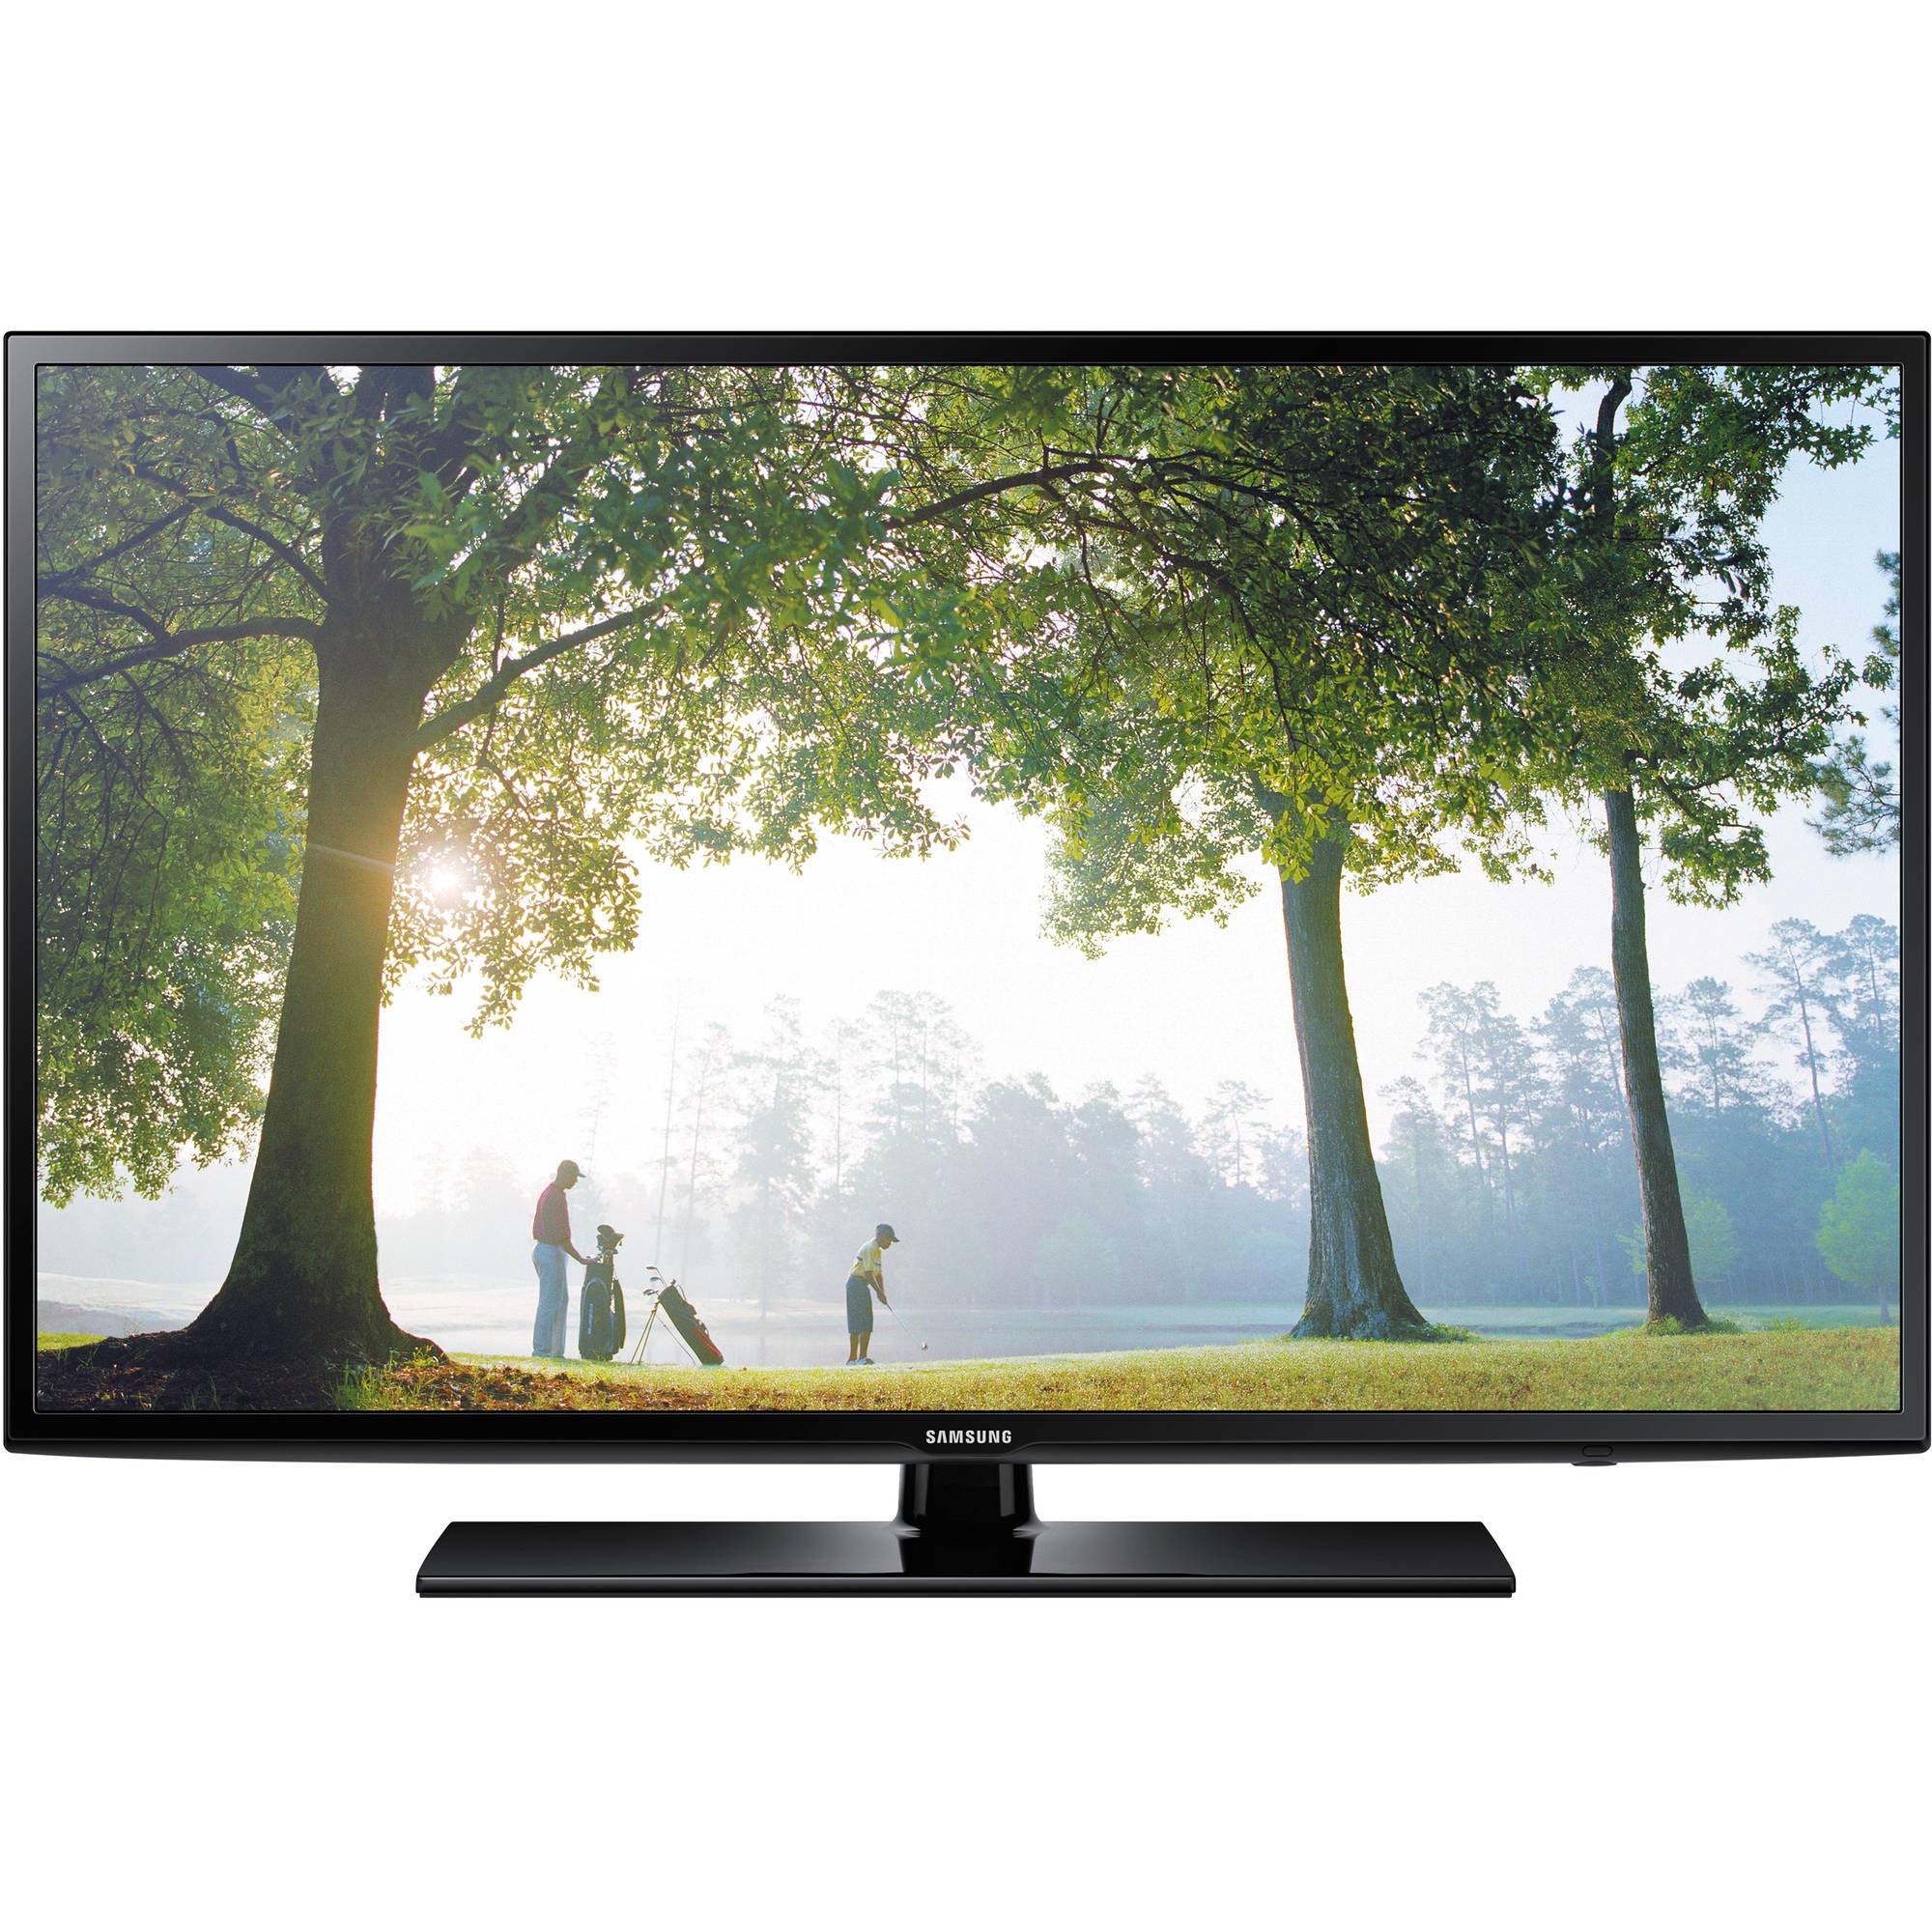 Samsung UN55H6203AF/XZA 55-Inch Led H6203 Series Smart TV